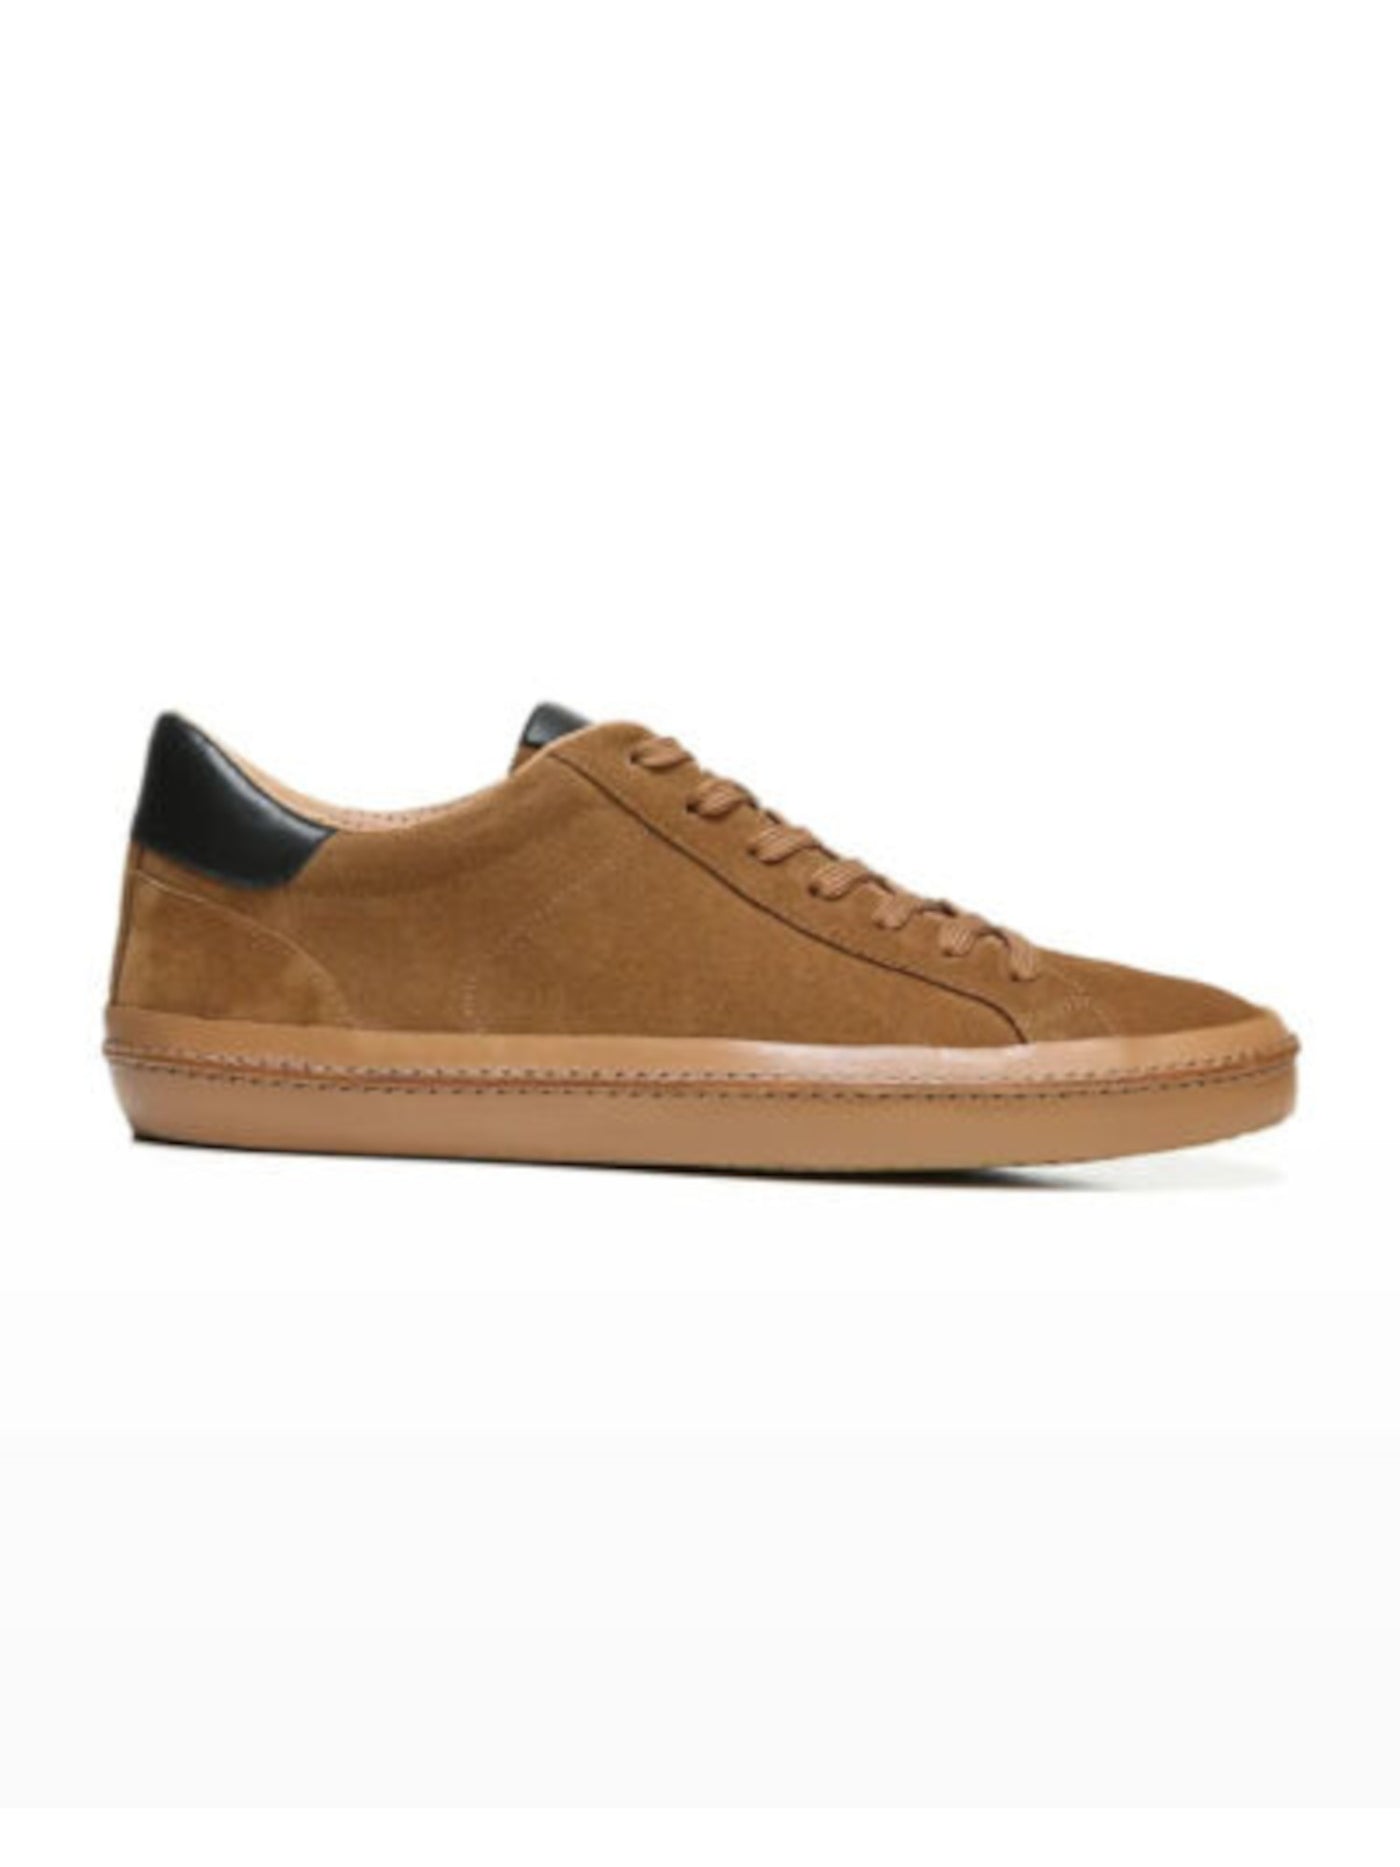 VINCE. Mens Brown Comfort Prescott Round Toe Platform Lace-Up Leather Athletic Sneakers Shoes 10 M